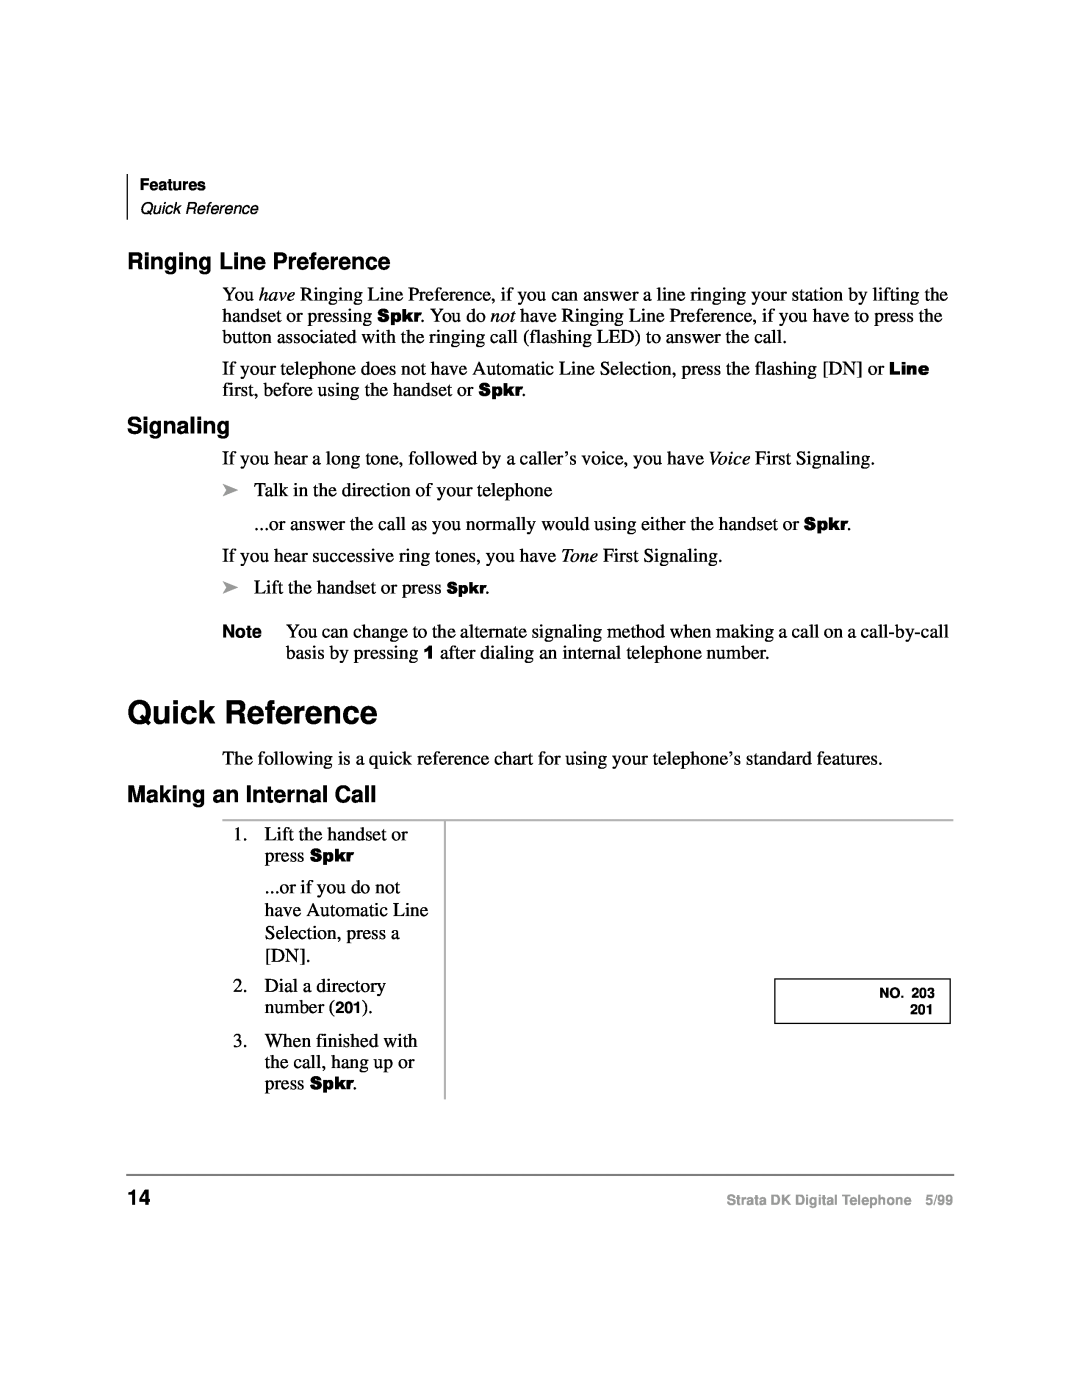 Toshiba CT manual Quick Reference, Ringing Line Preference, Signaling, Making an Internal Call 